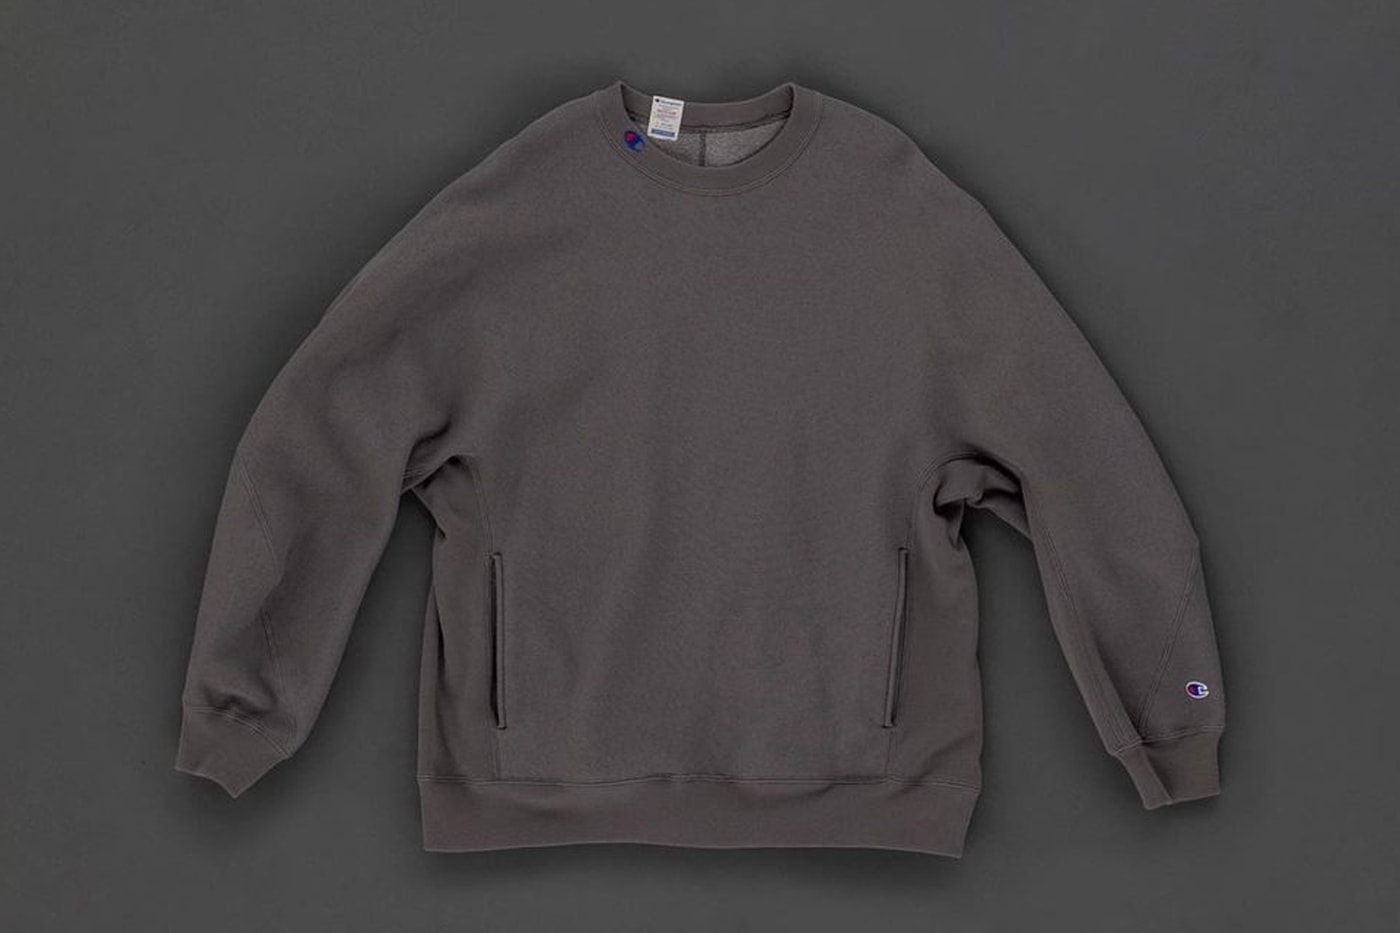 N Hoolywood Champion new Reverse Weave sweatshirt sweatpant hoodie release info date price 